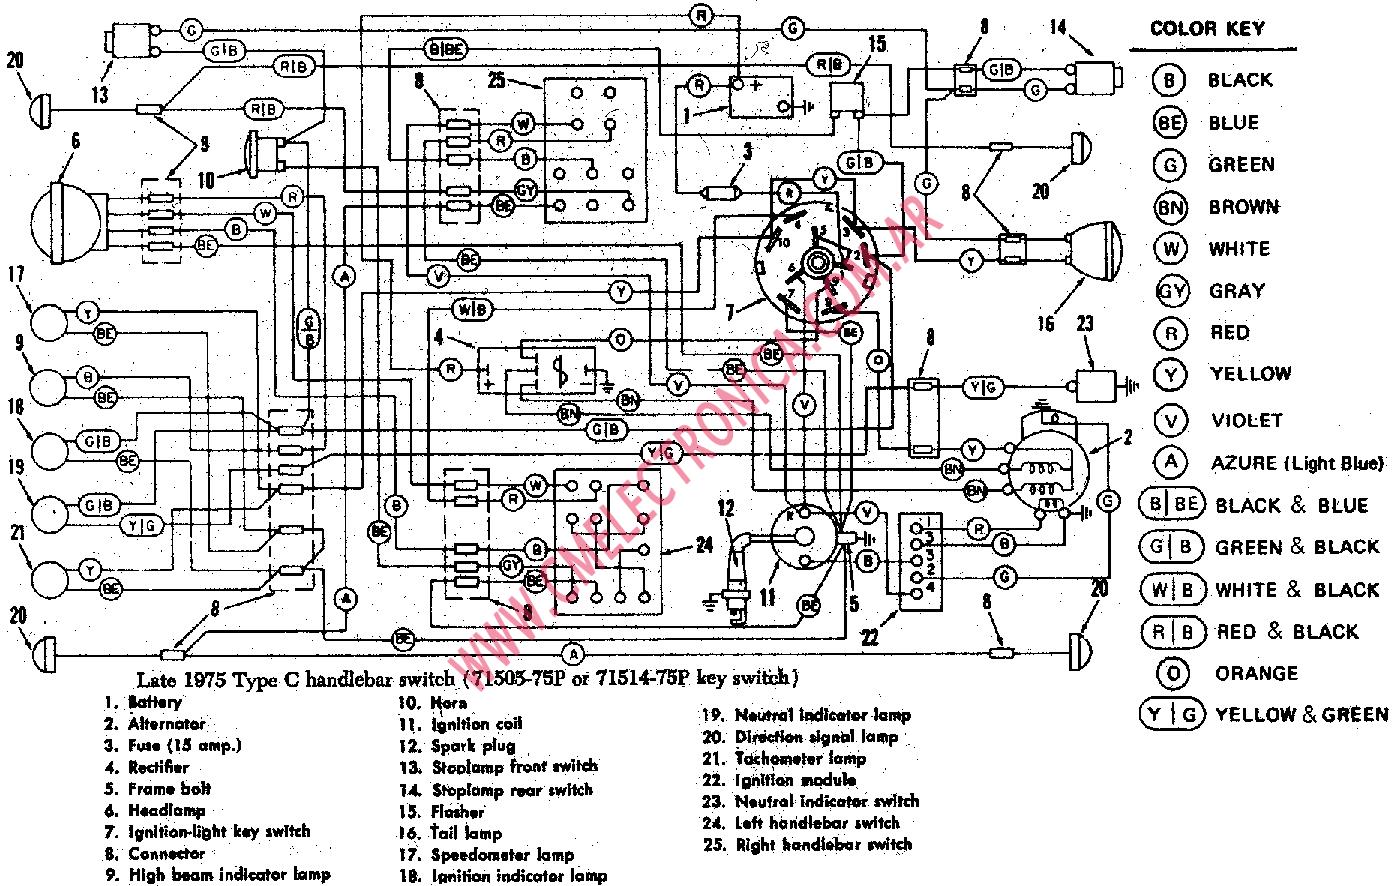 1990 Harley Davidson Fxr Wiring Diagram - Wiring Diagram